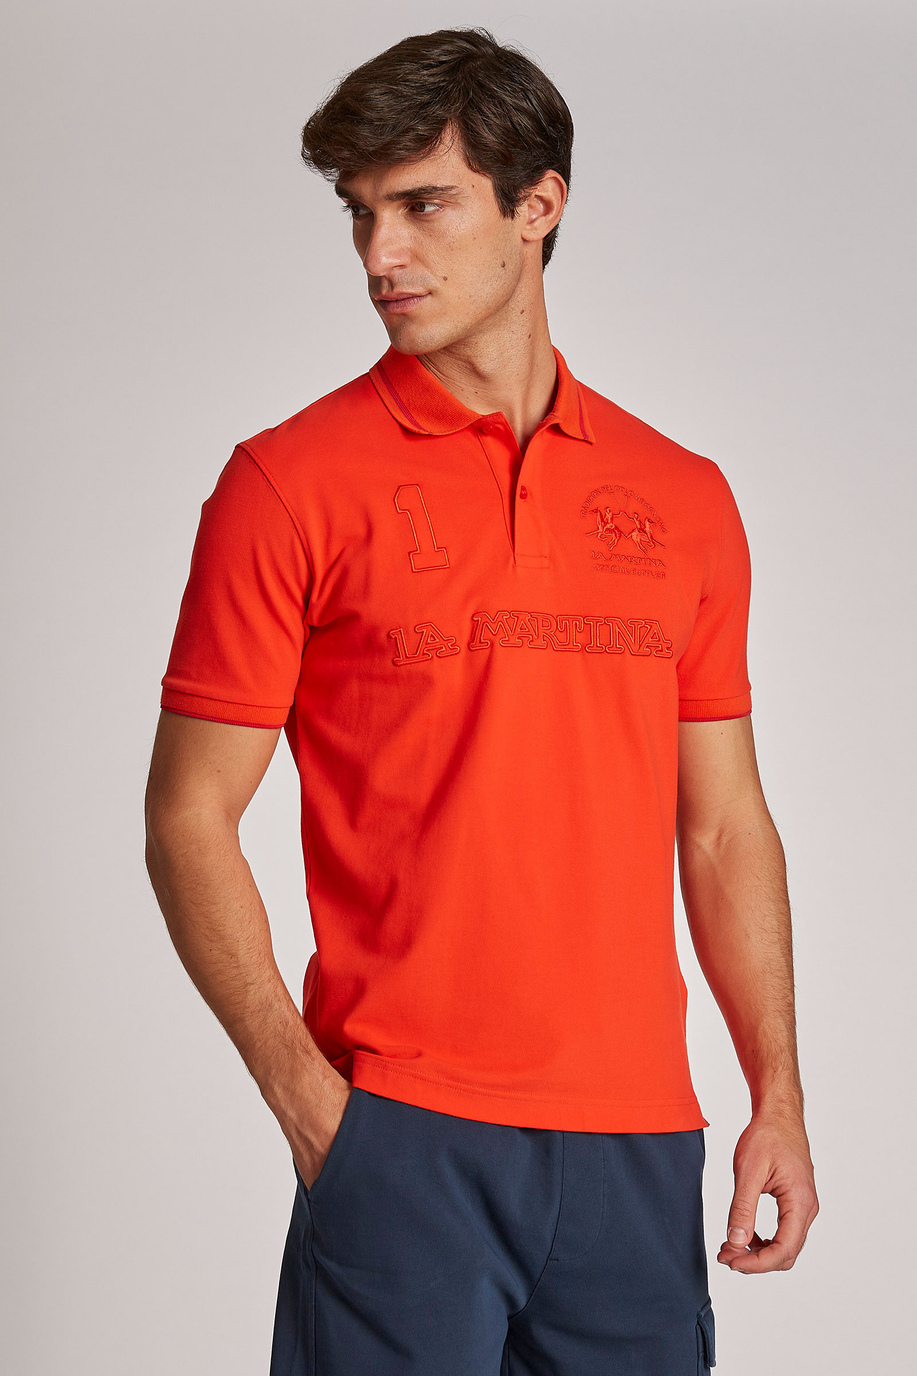 Herren-Poloshirt aus Stretch-Baumwolle mit kurzen Ärmeln im Regular Fit - Casual | La Martina - Official Online Shop